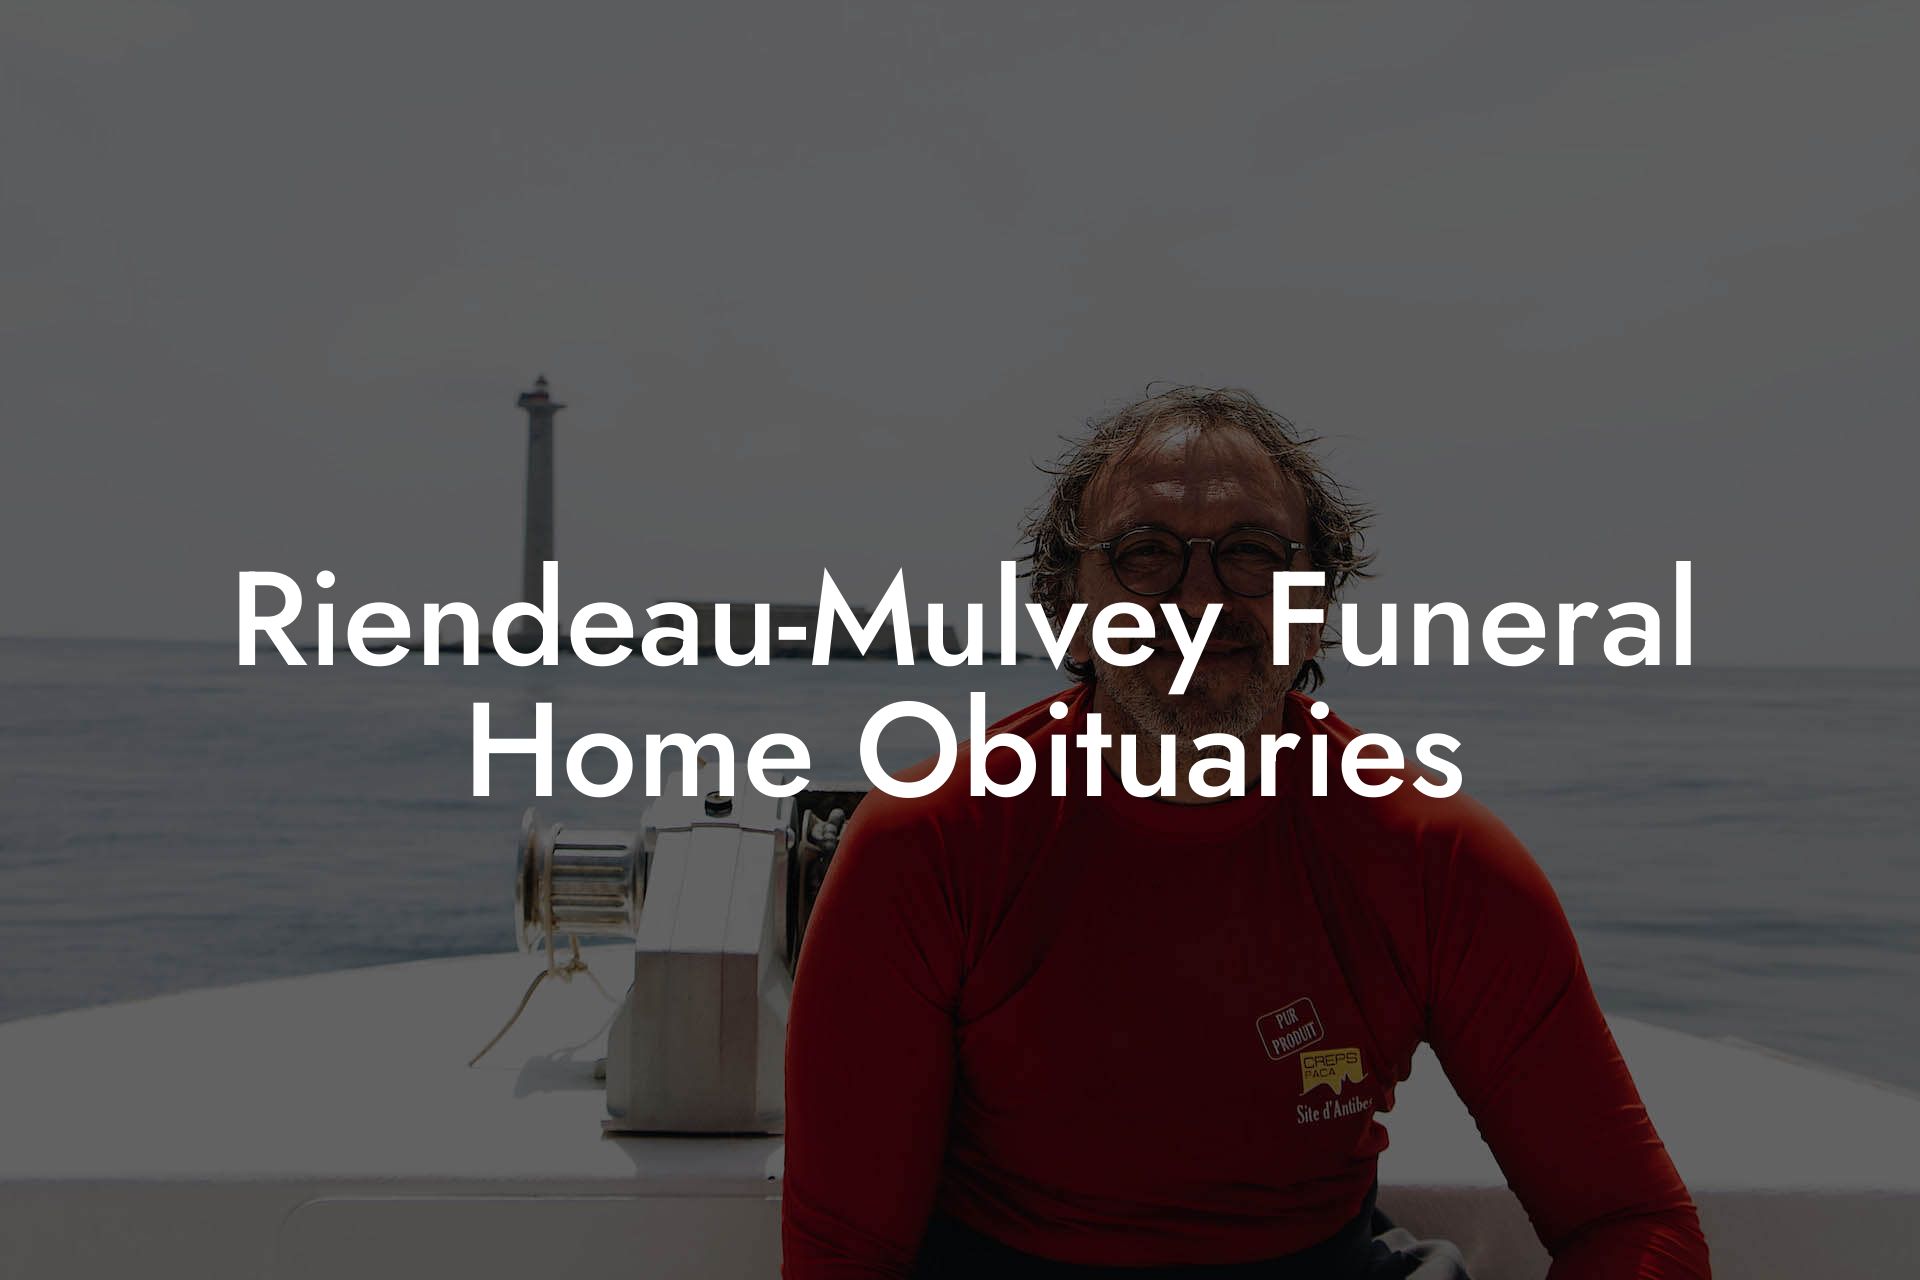 Riendeau-Mulvey Funeral Home Obituaries